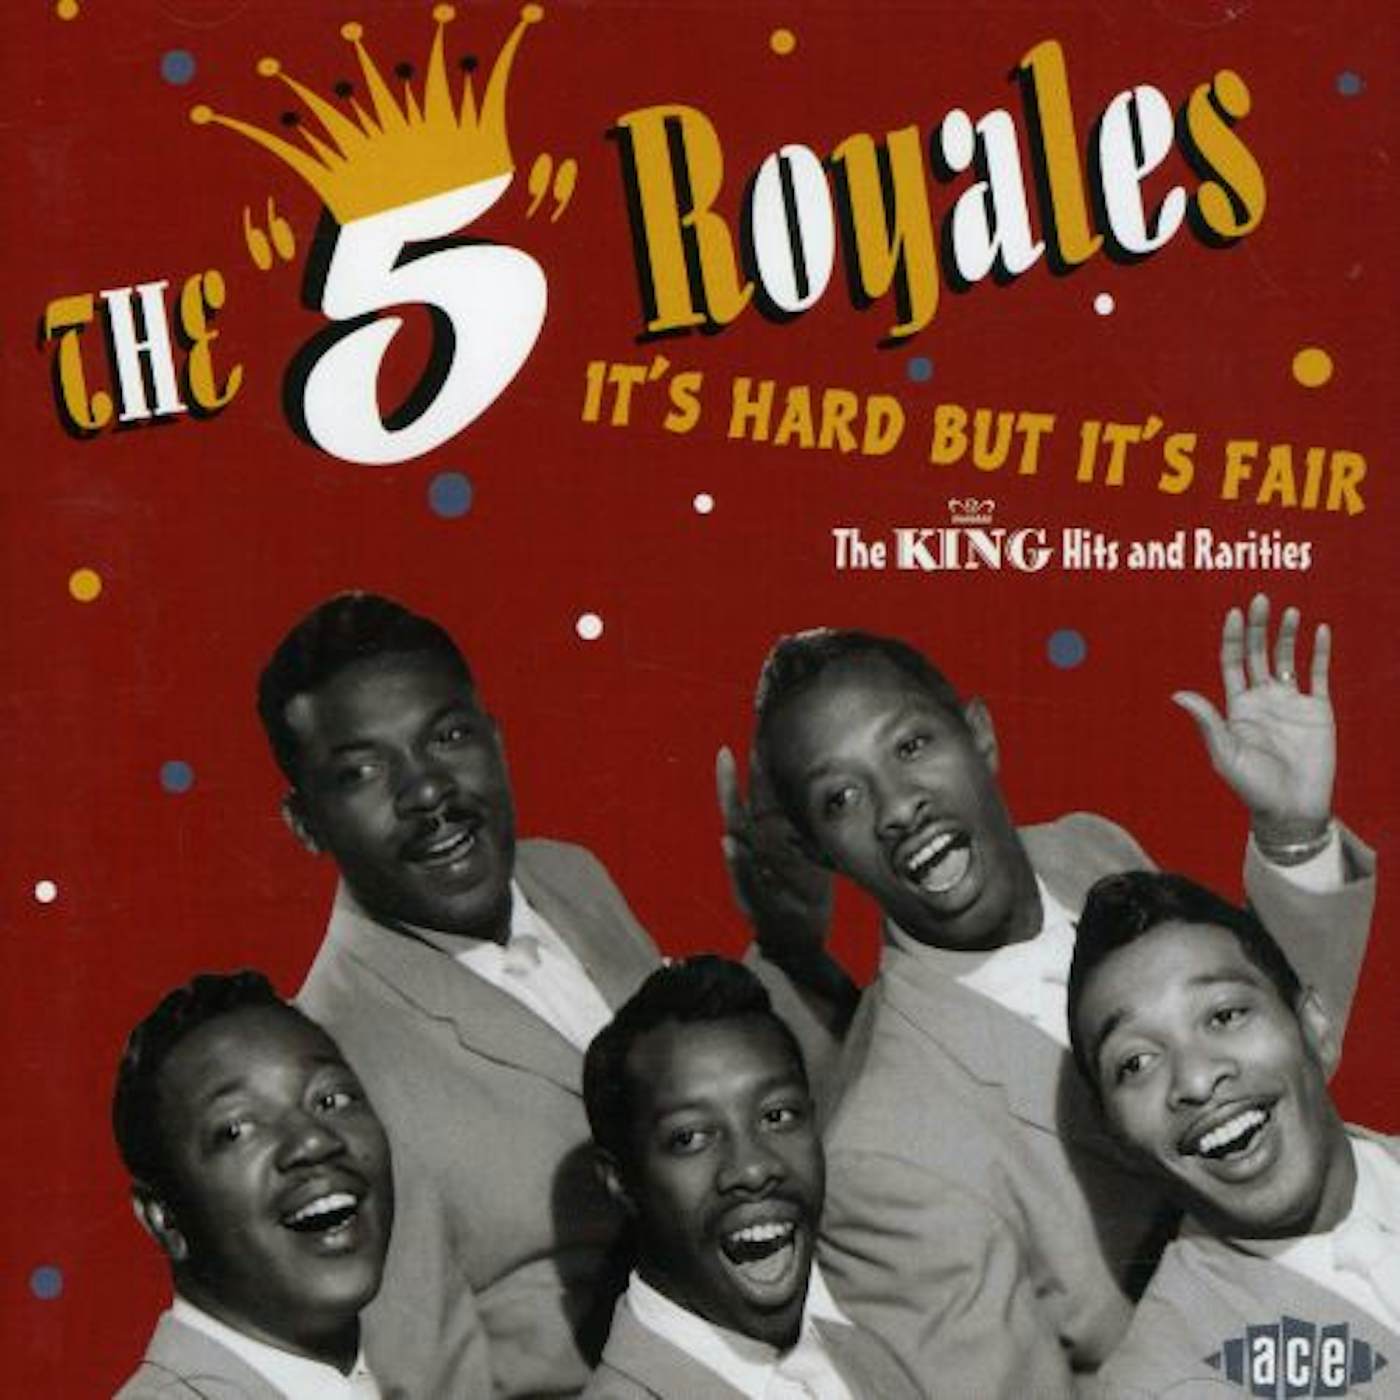 Five Royales IT'S HARD BUT IT'S FAIR: KING HITS & RARITIES CD